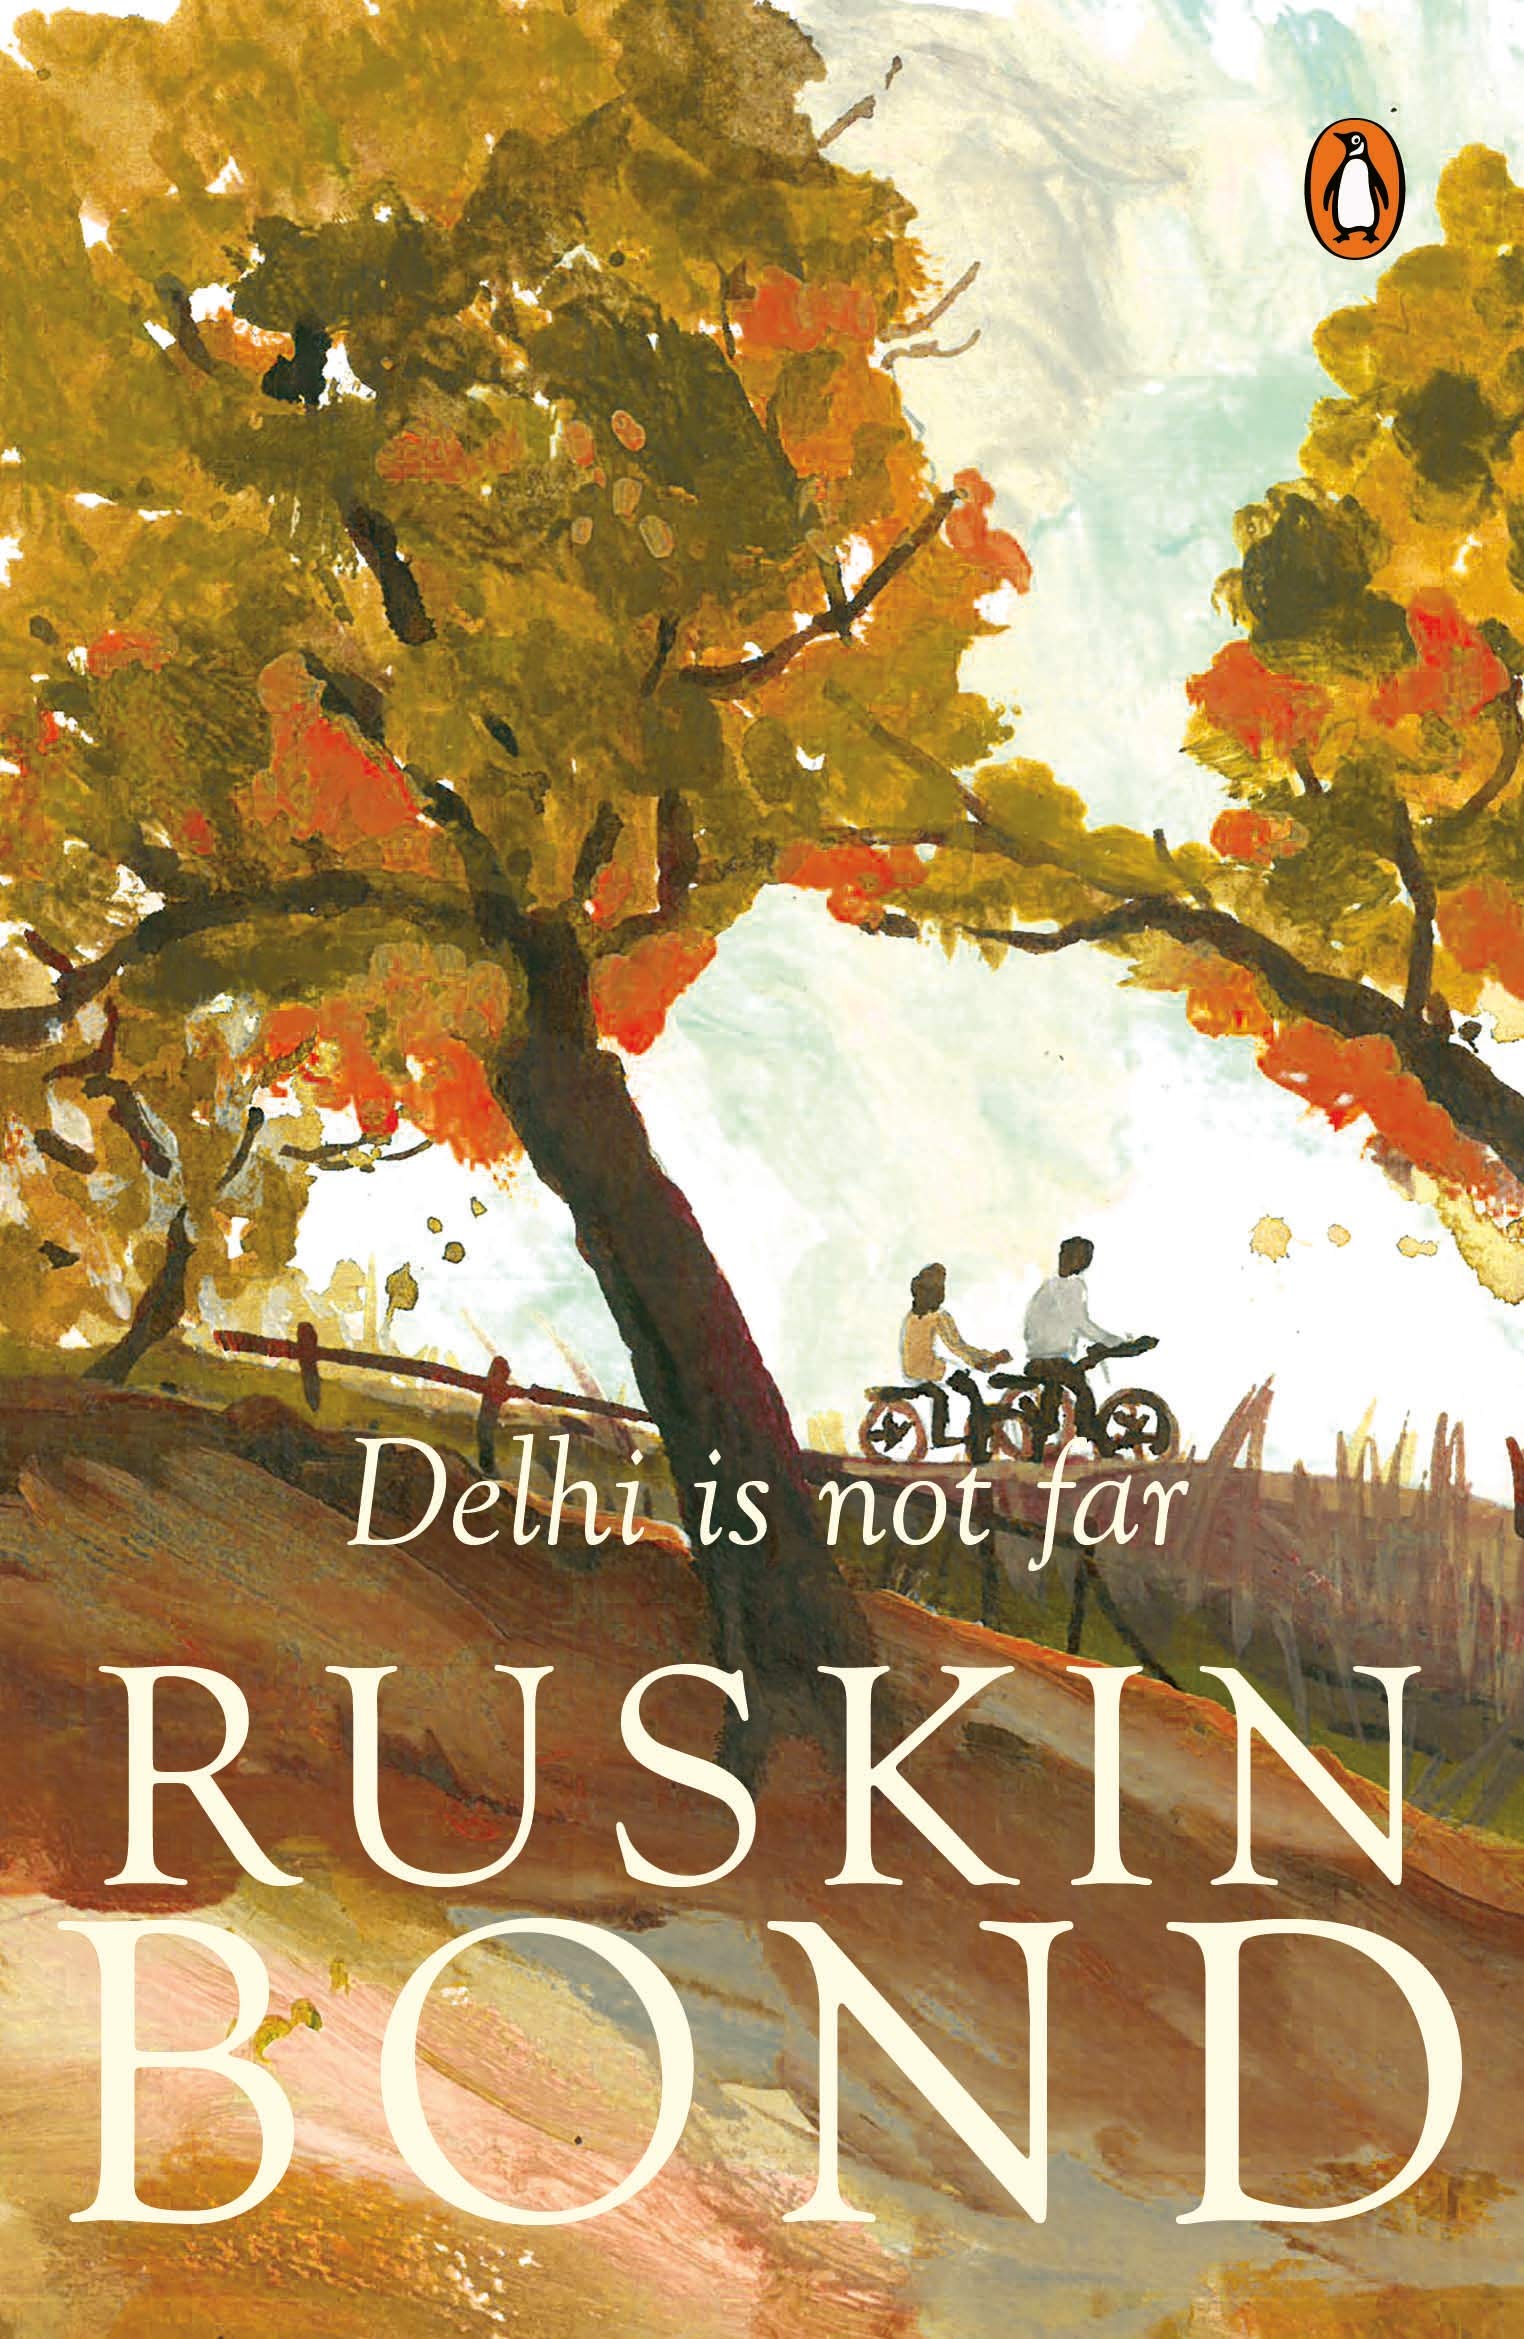 Why Ruskin Bond’s ‘Delhi is Not Far’ Is A Breath of Fresh Air